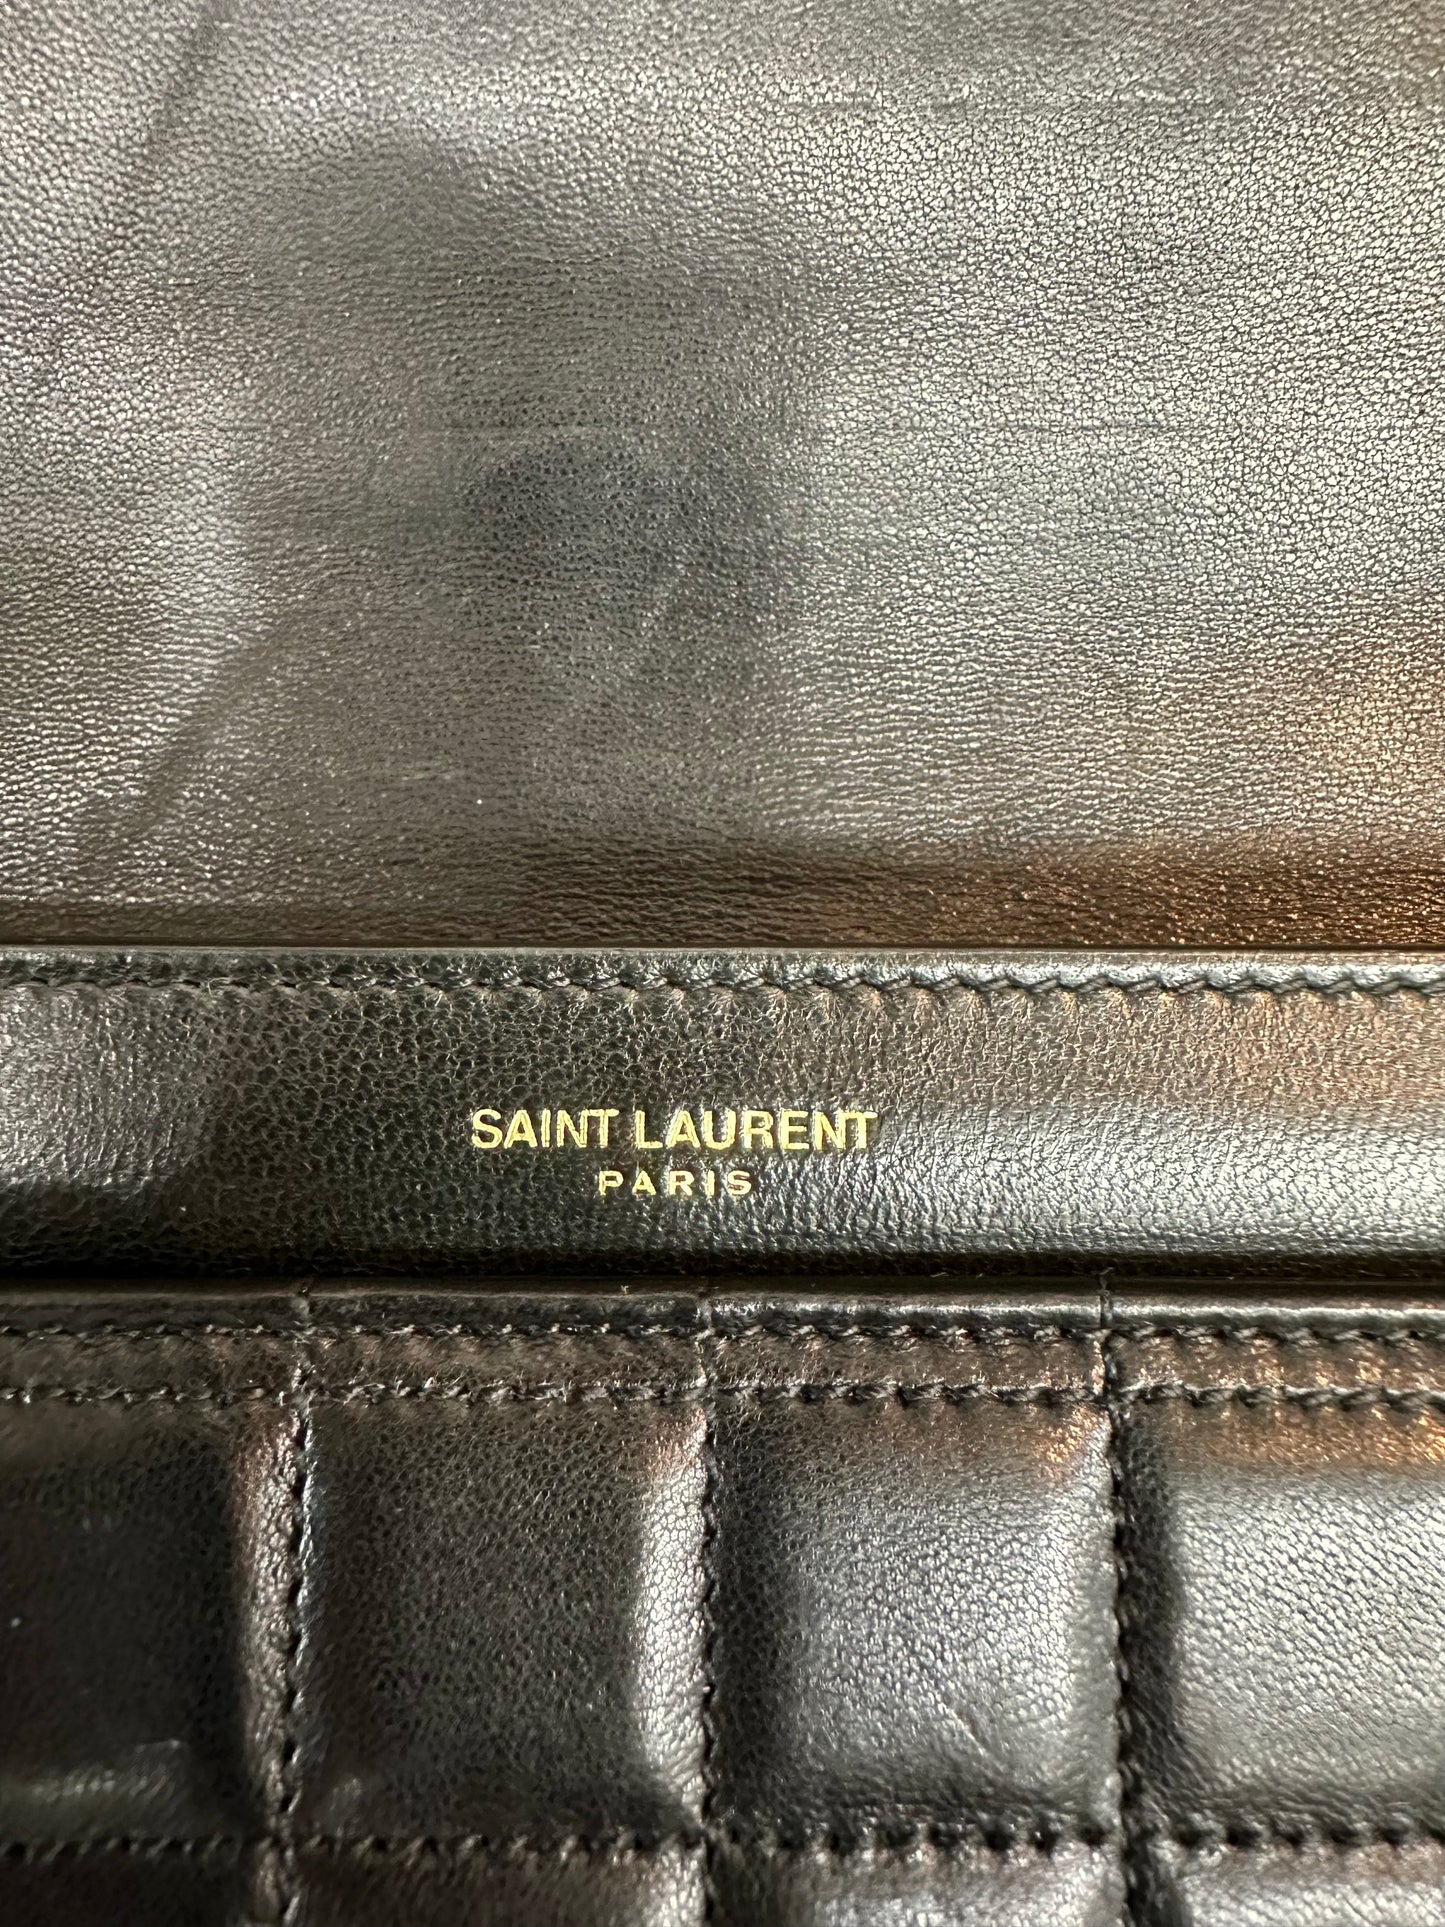 Close up of Saint Laurent logo 